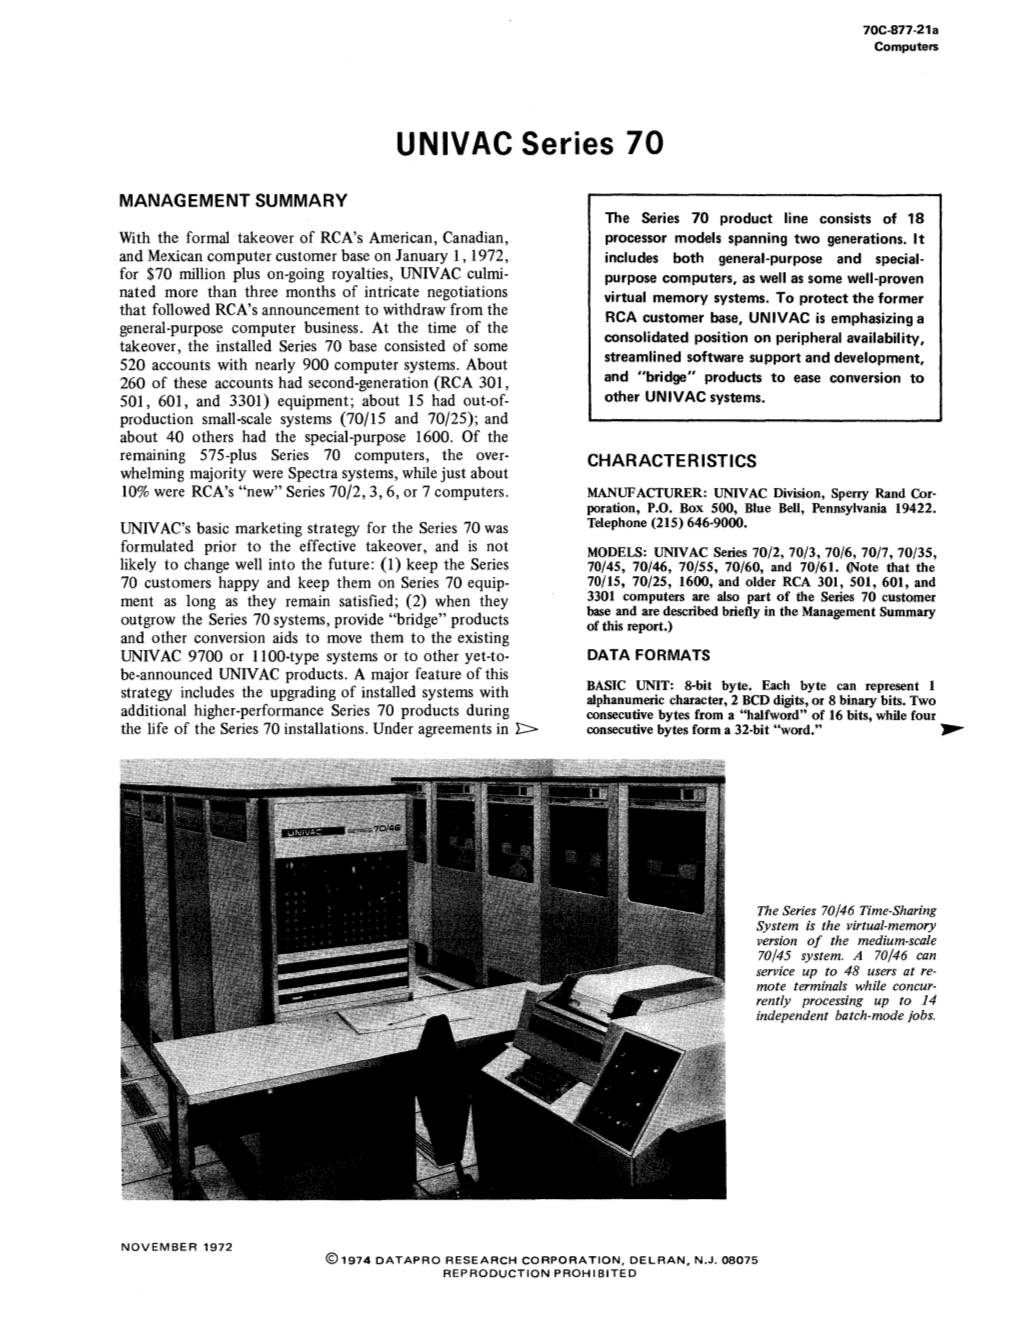 UNIVAC Series 70